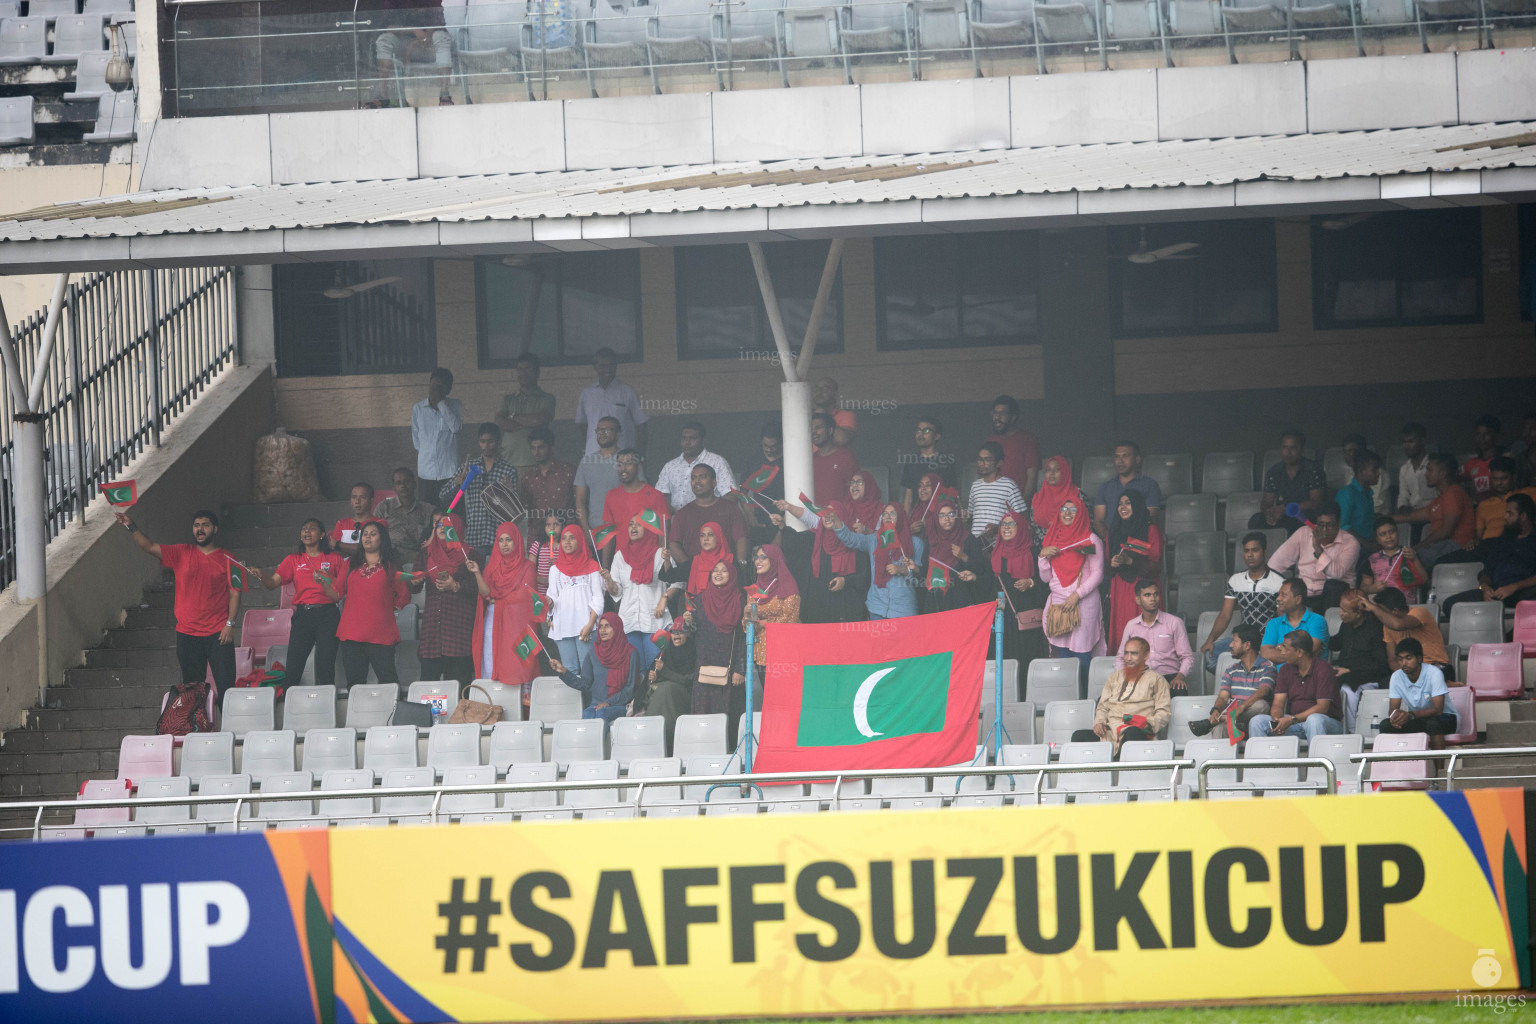 SAFF Suzuki Cup 2018 Semi Final: India vs Pakistan